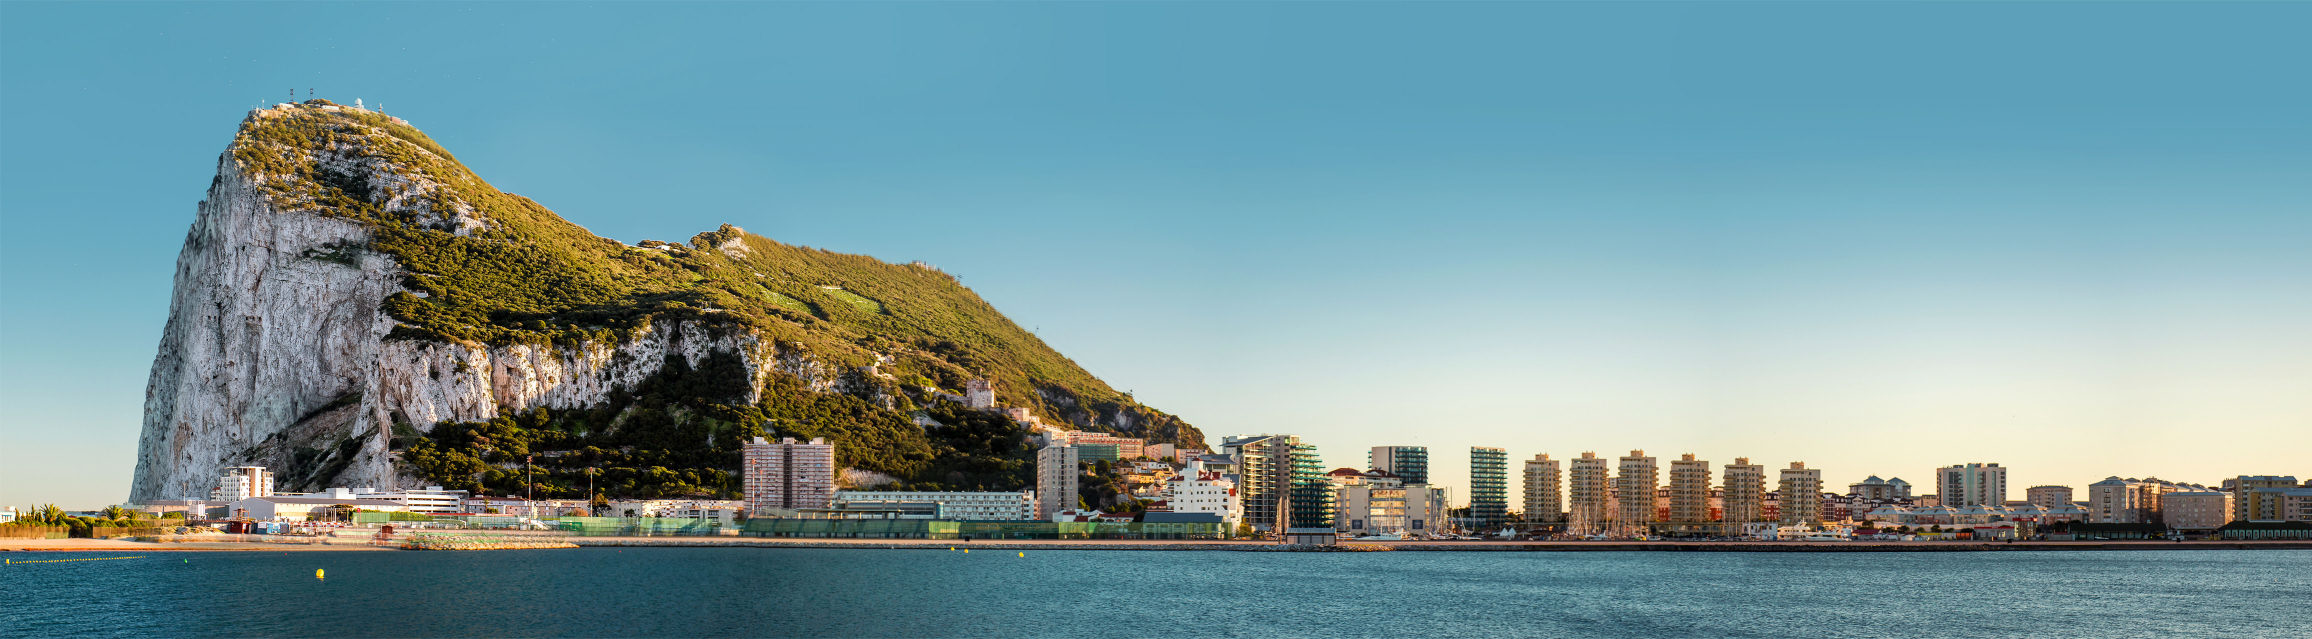 Amcham Gibraltar